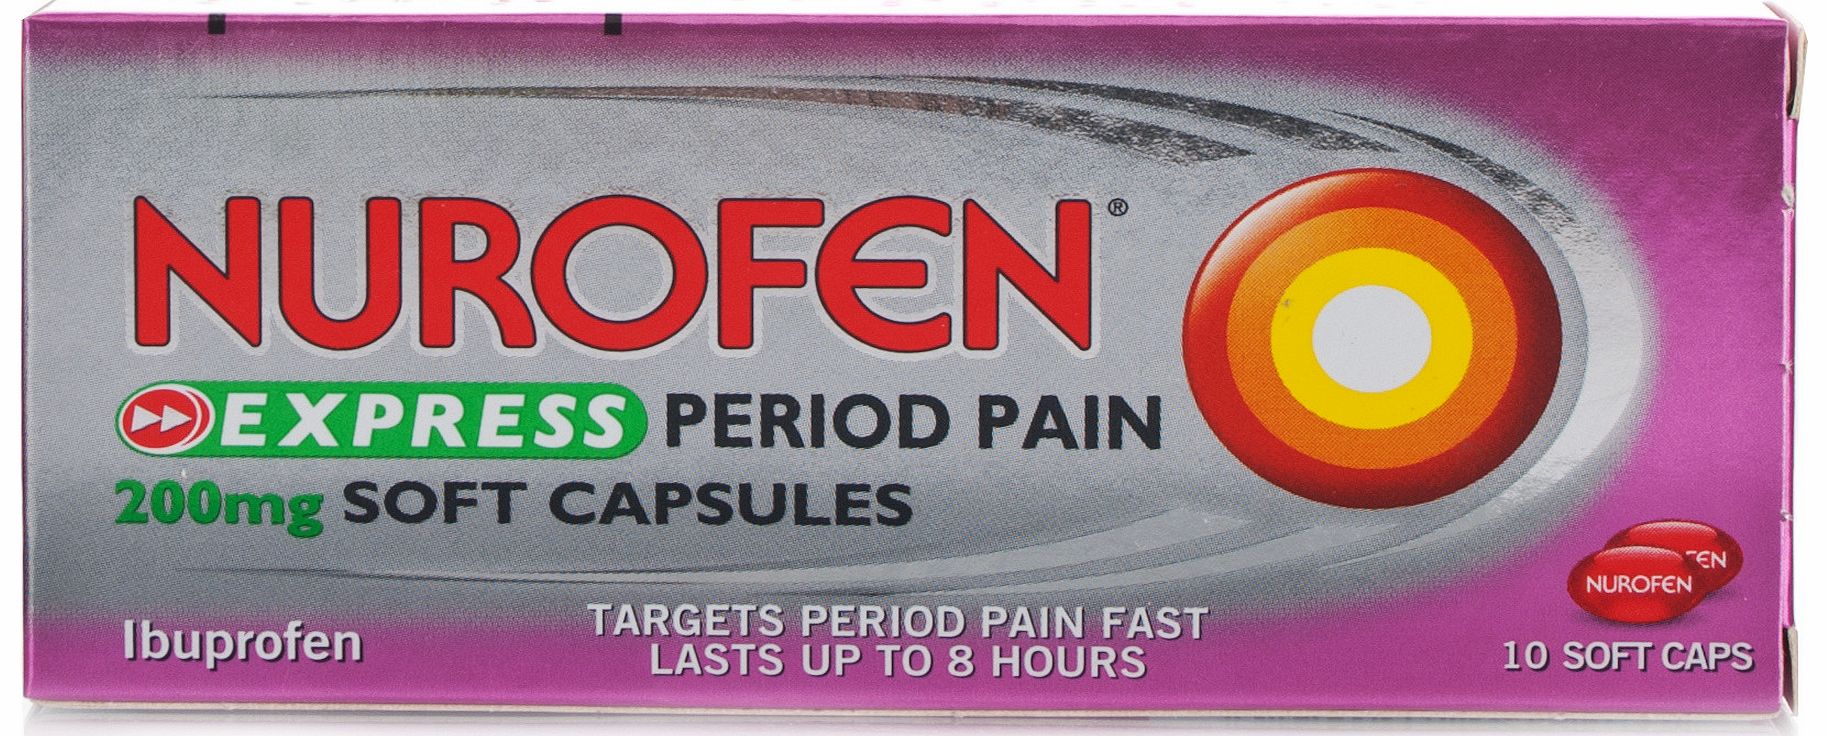 nurofen Express Period Pain 200mg Soft Capsules